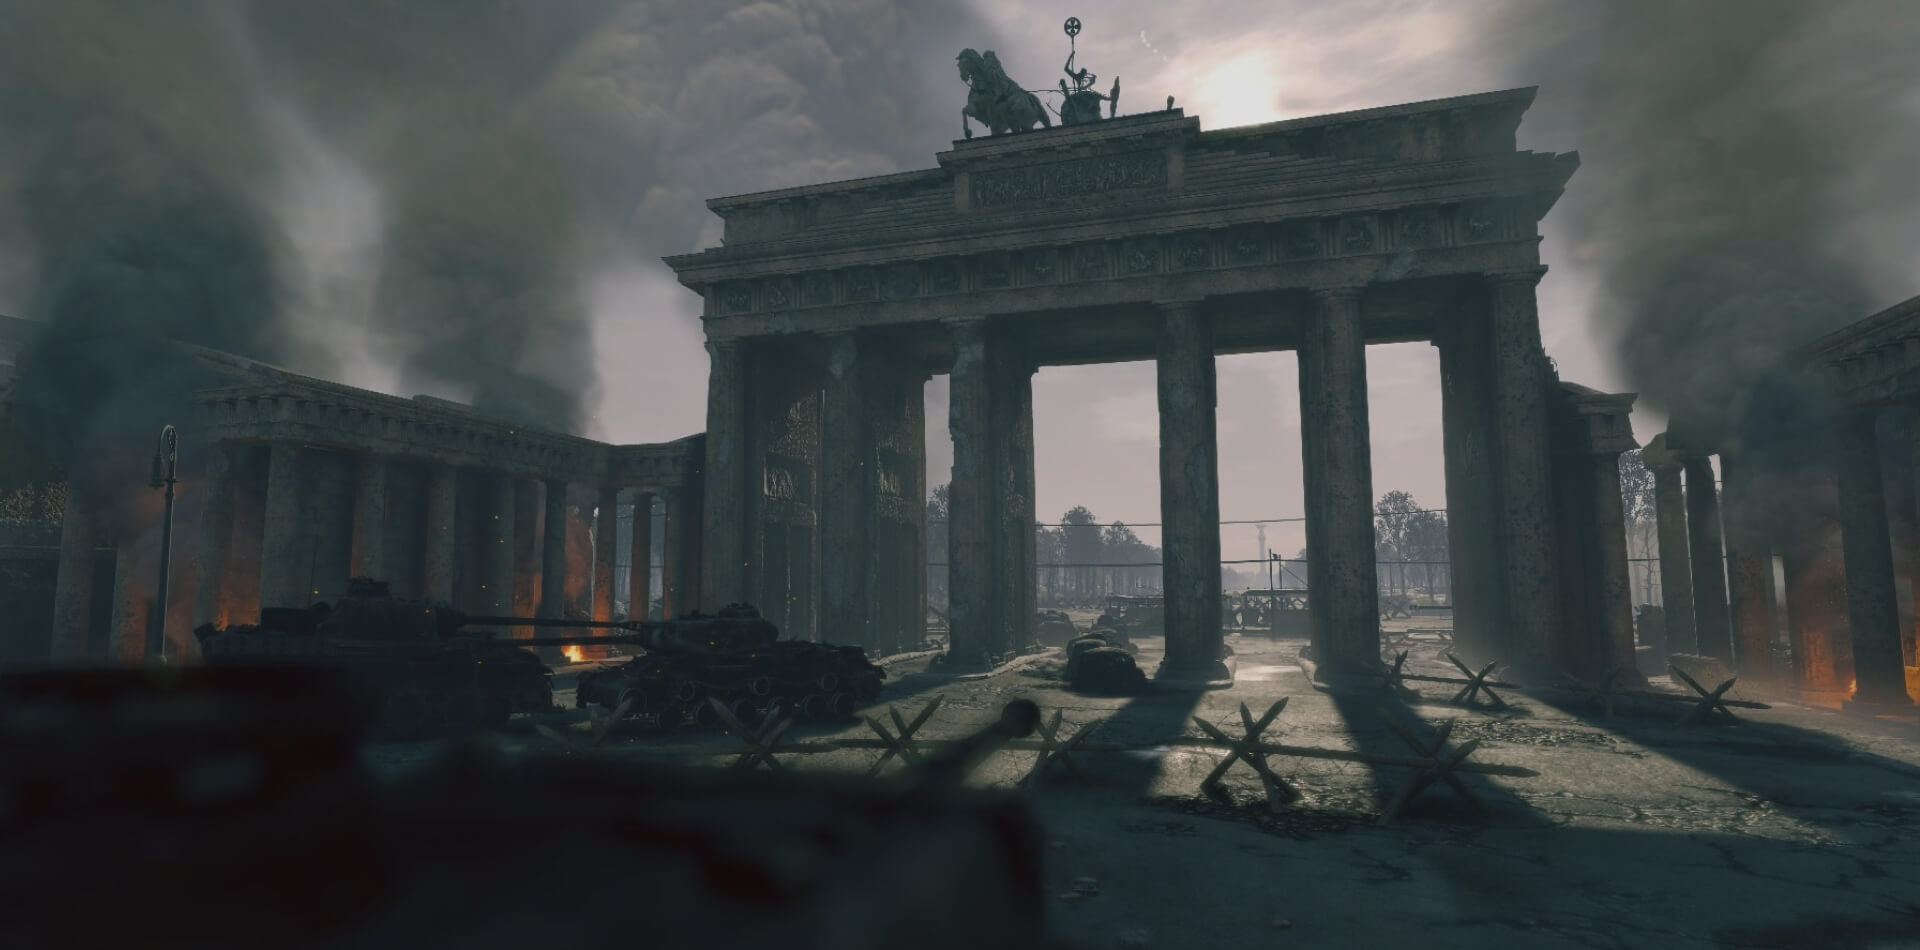 Batalla de Berlín